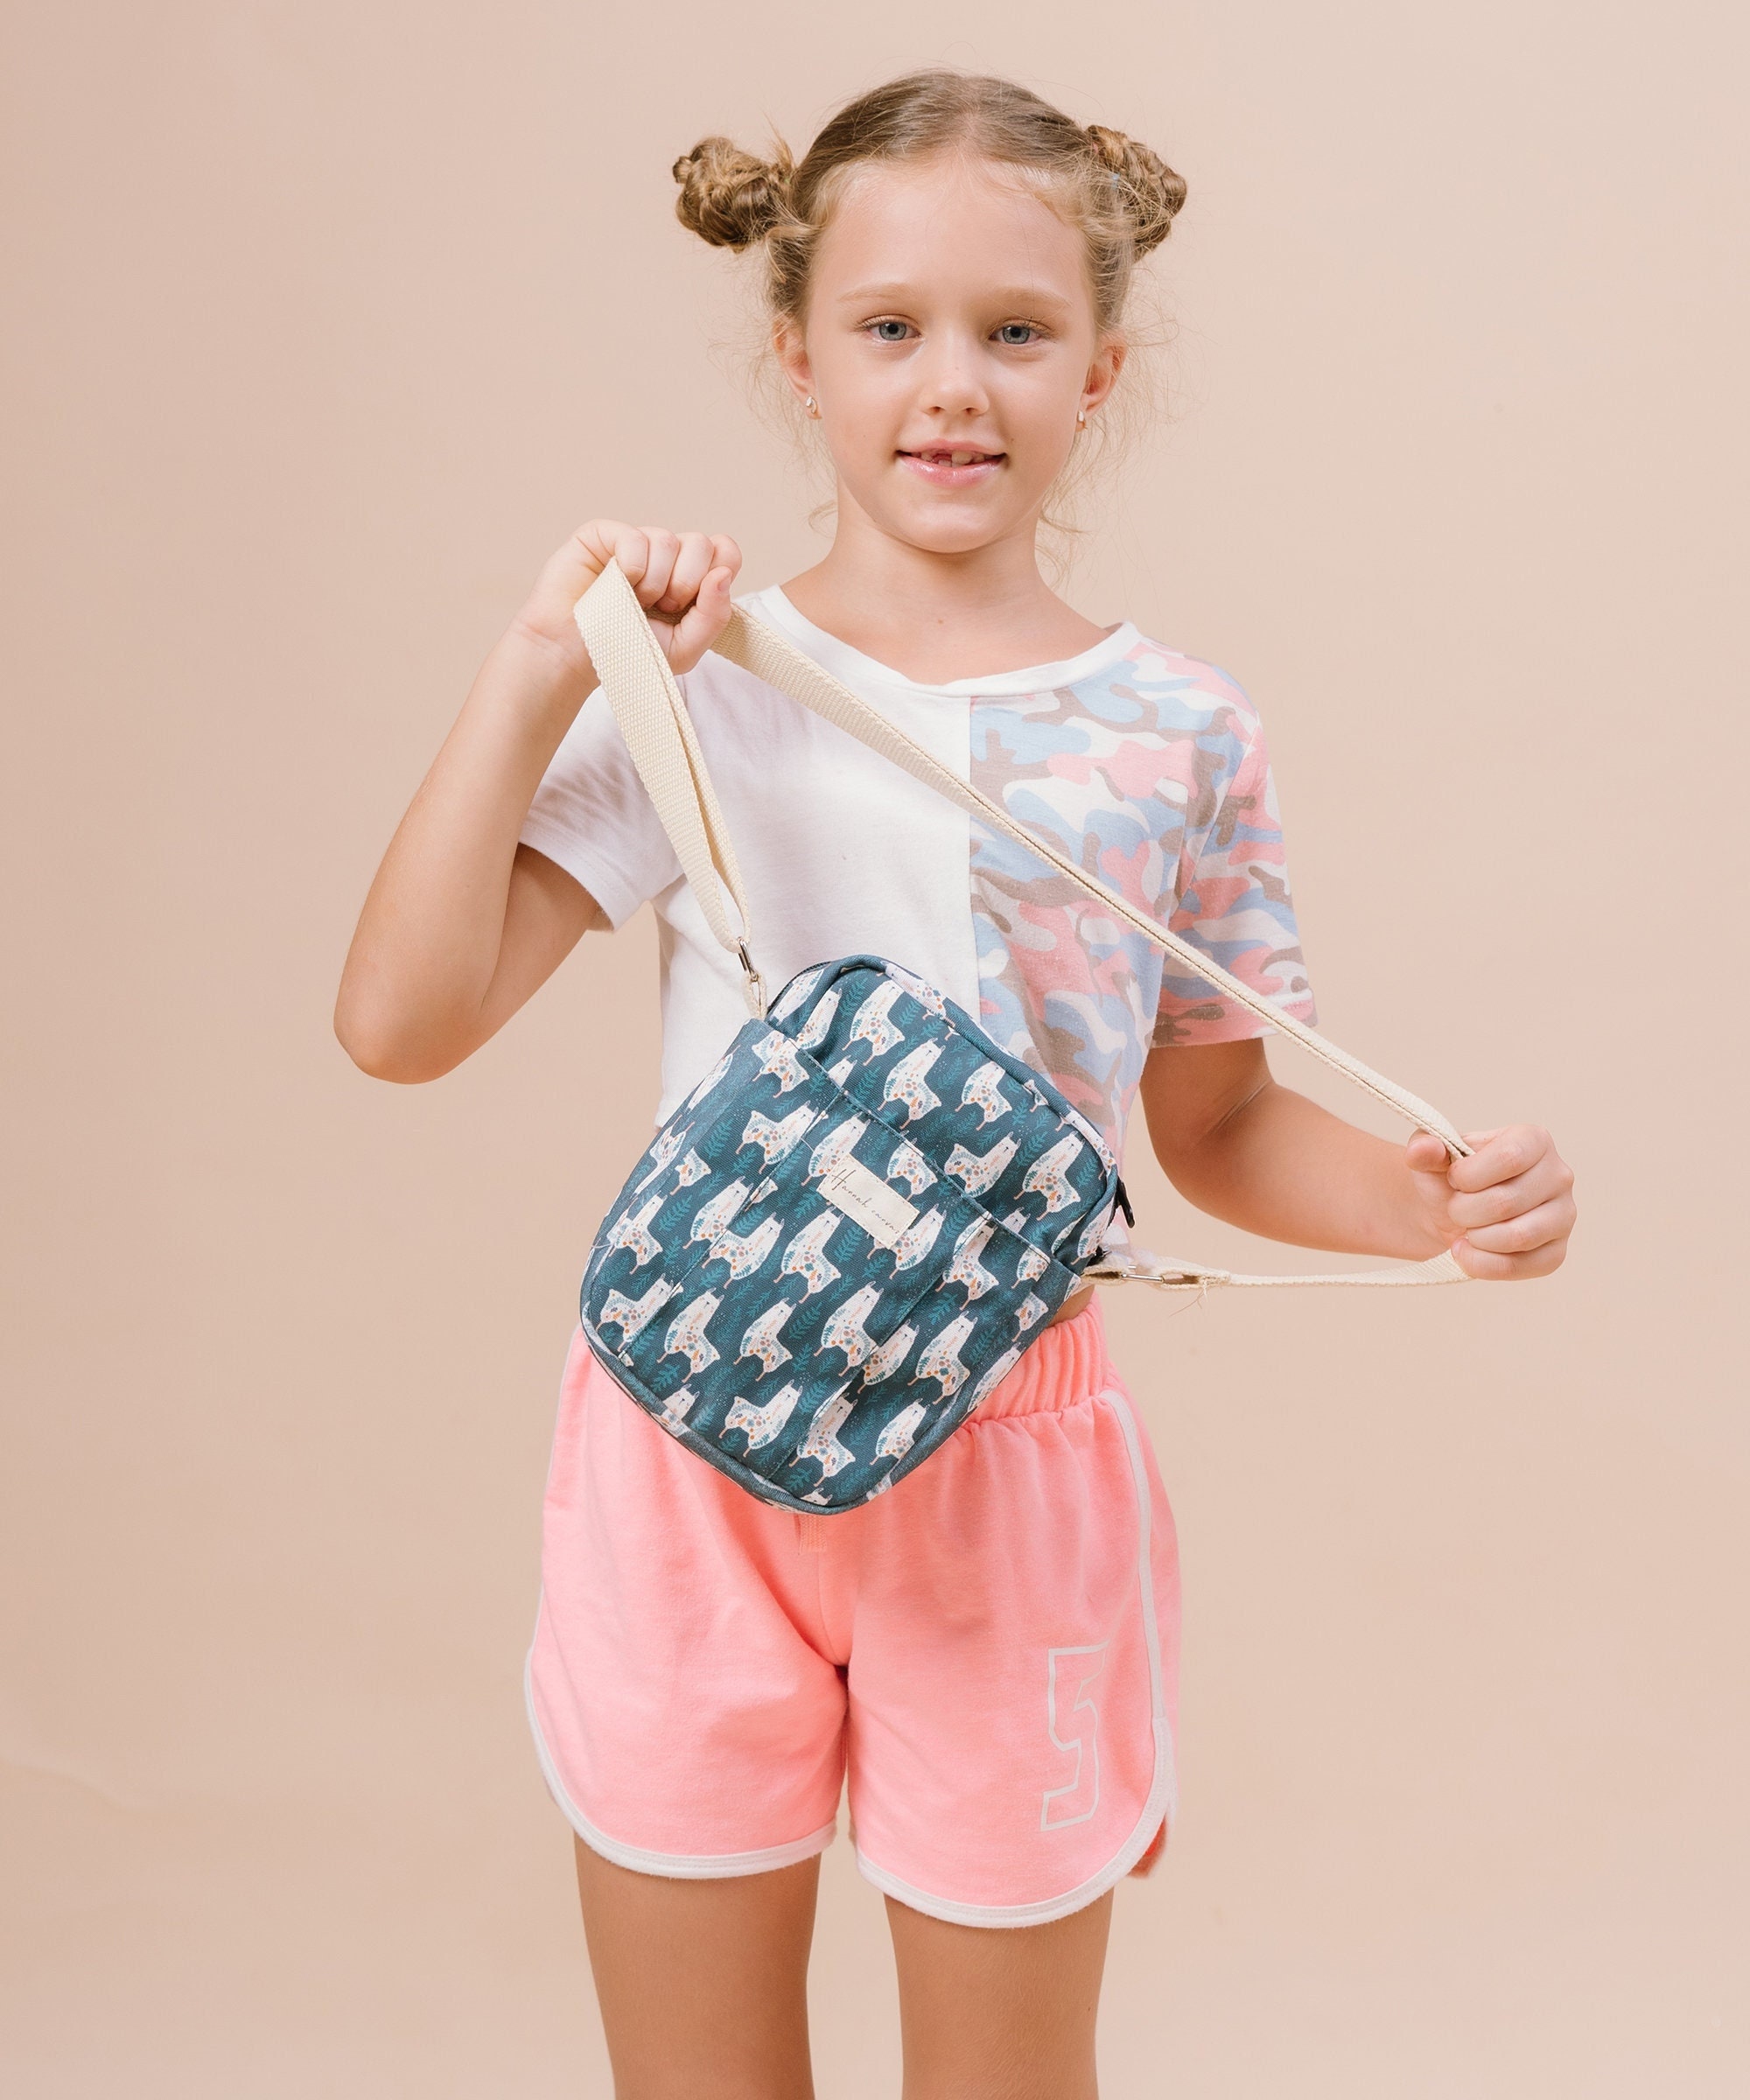 Bolley Joss Little Girl Crossbody Purse Cute Fashion Leather Mini Shoulder  Saddle Bag Toddler Handbag with Chain